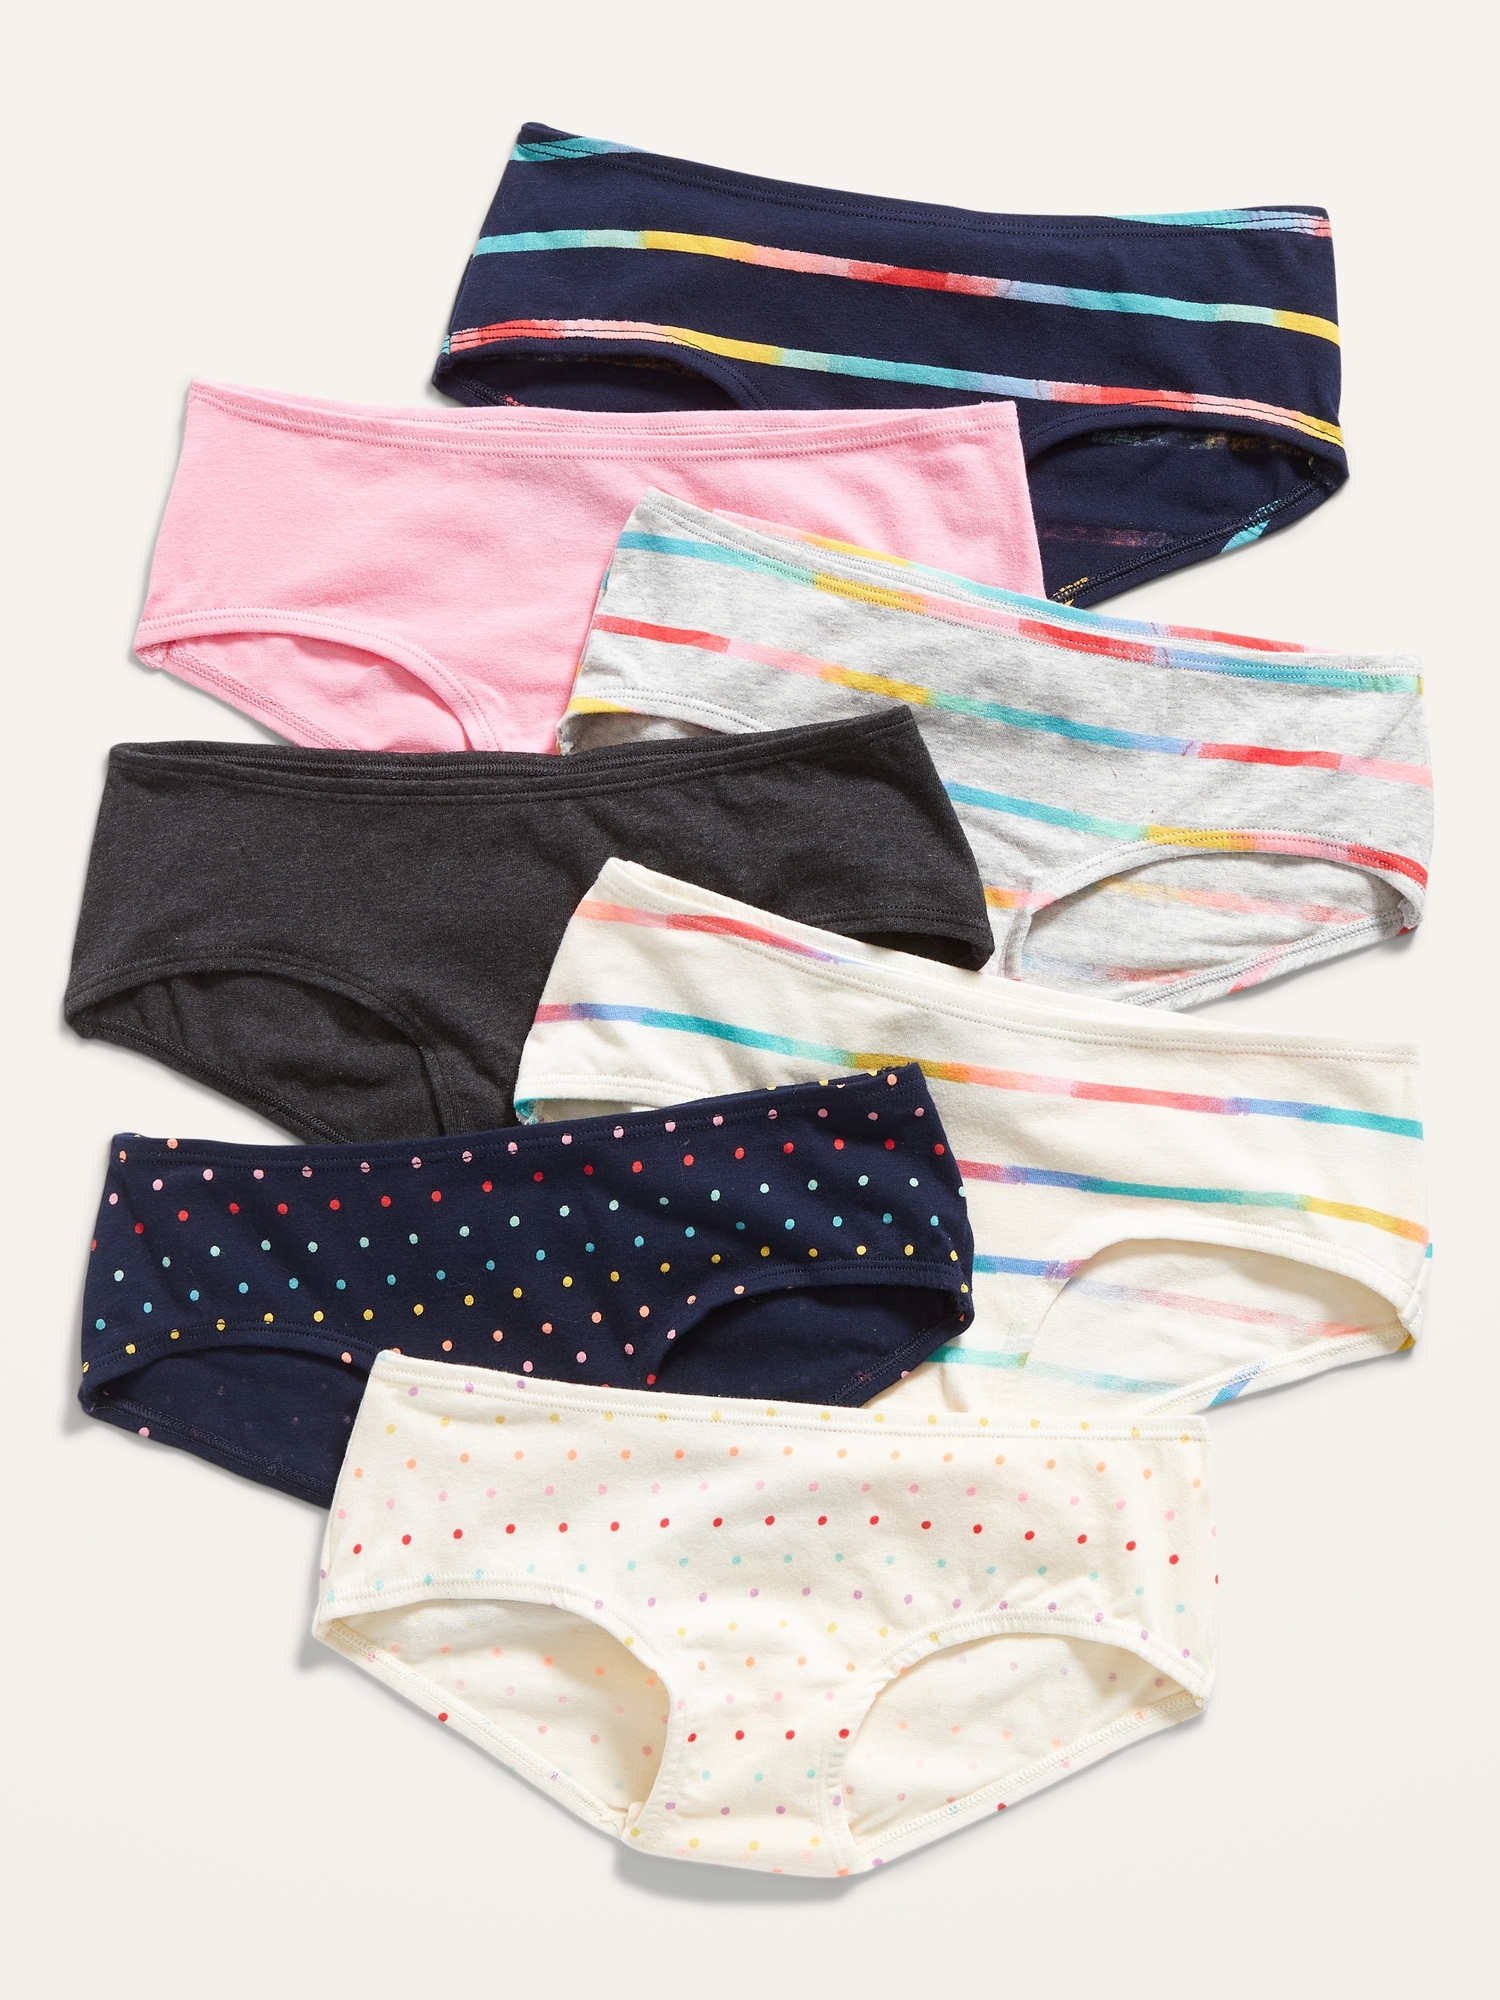 Girls : Underwear and Undershirts - Shoppers Paradise